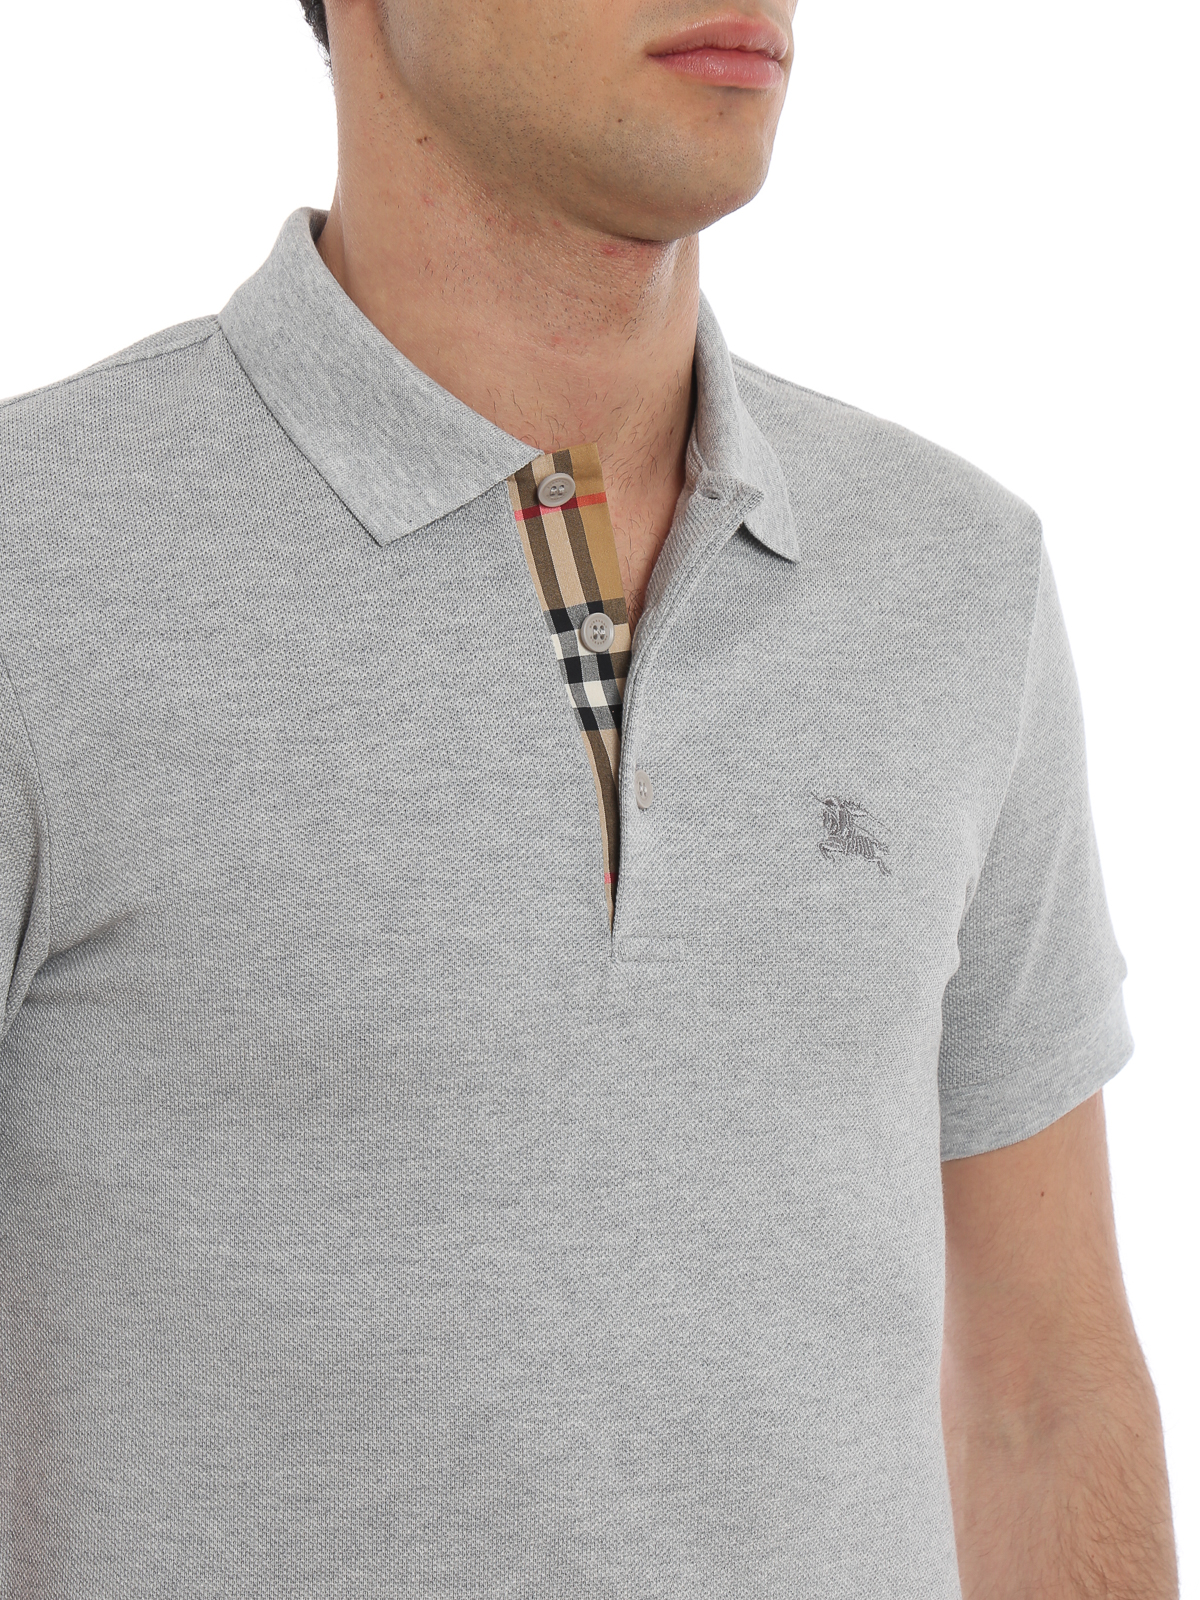 Polo shirts Burberry - Hartford classic grey cotton polo - 8004241